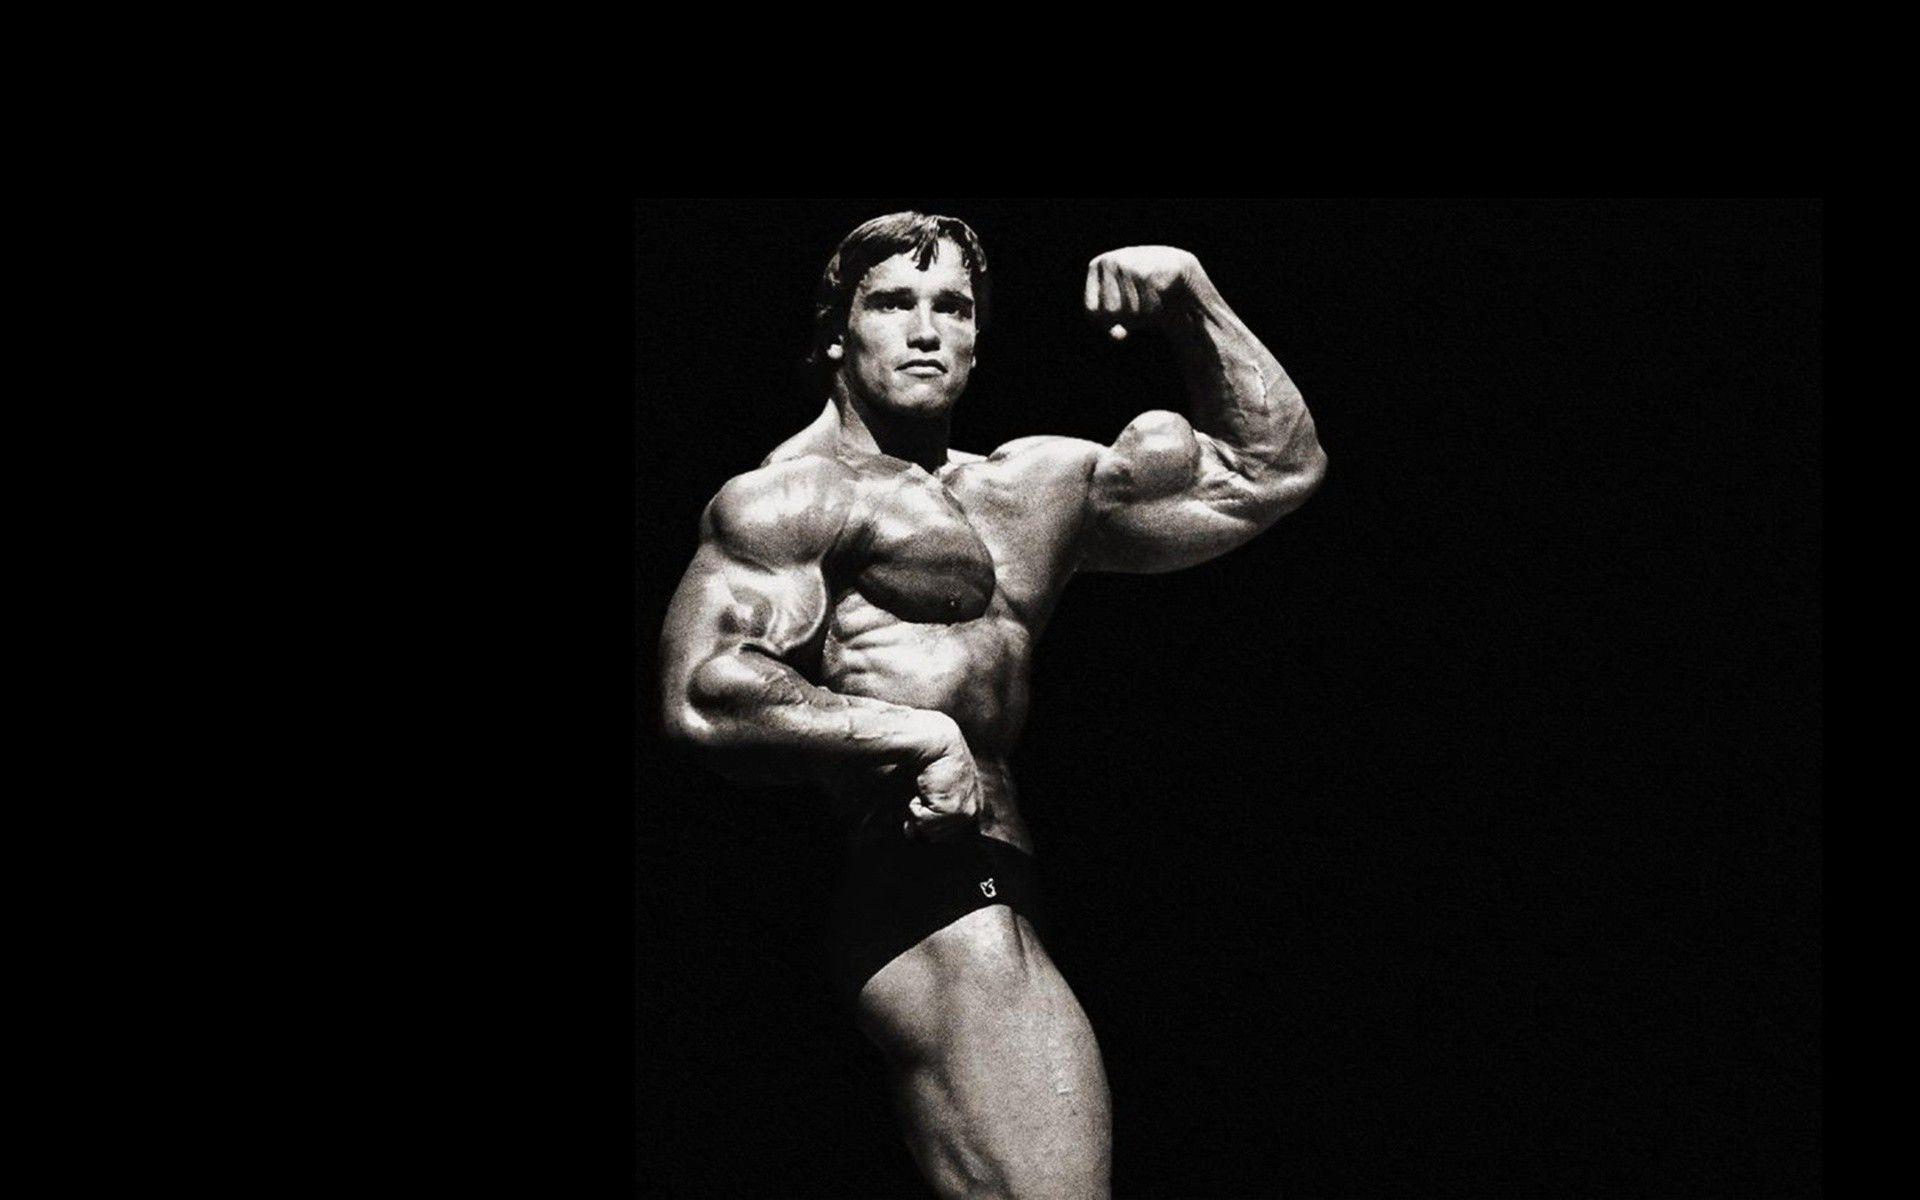 Arnold Bodybuilding Wallpapers Top Free Arnold Bodybuilding